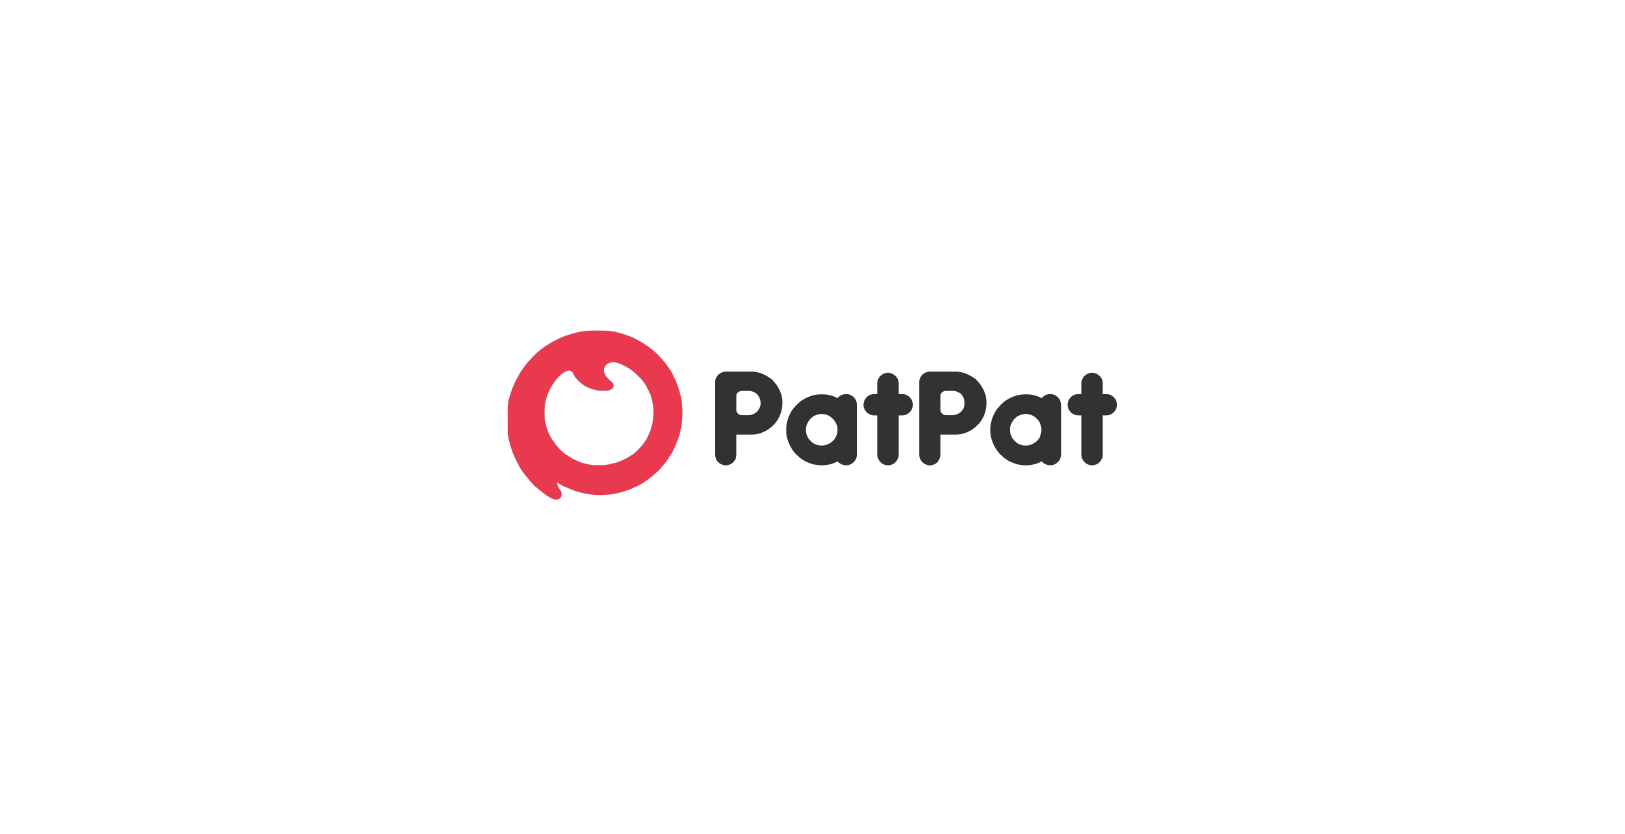 Vision Fund investment portfolio company PatPat's logo